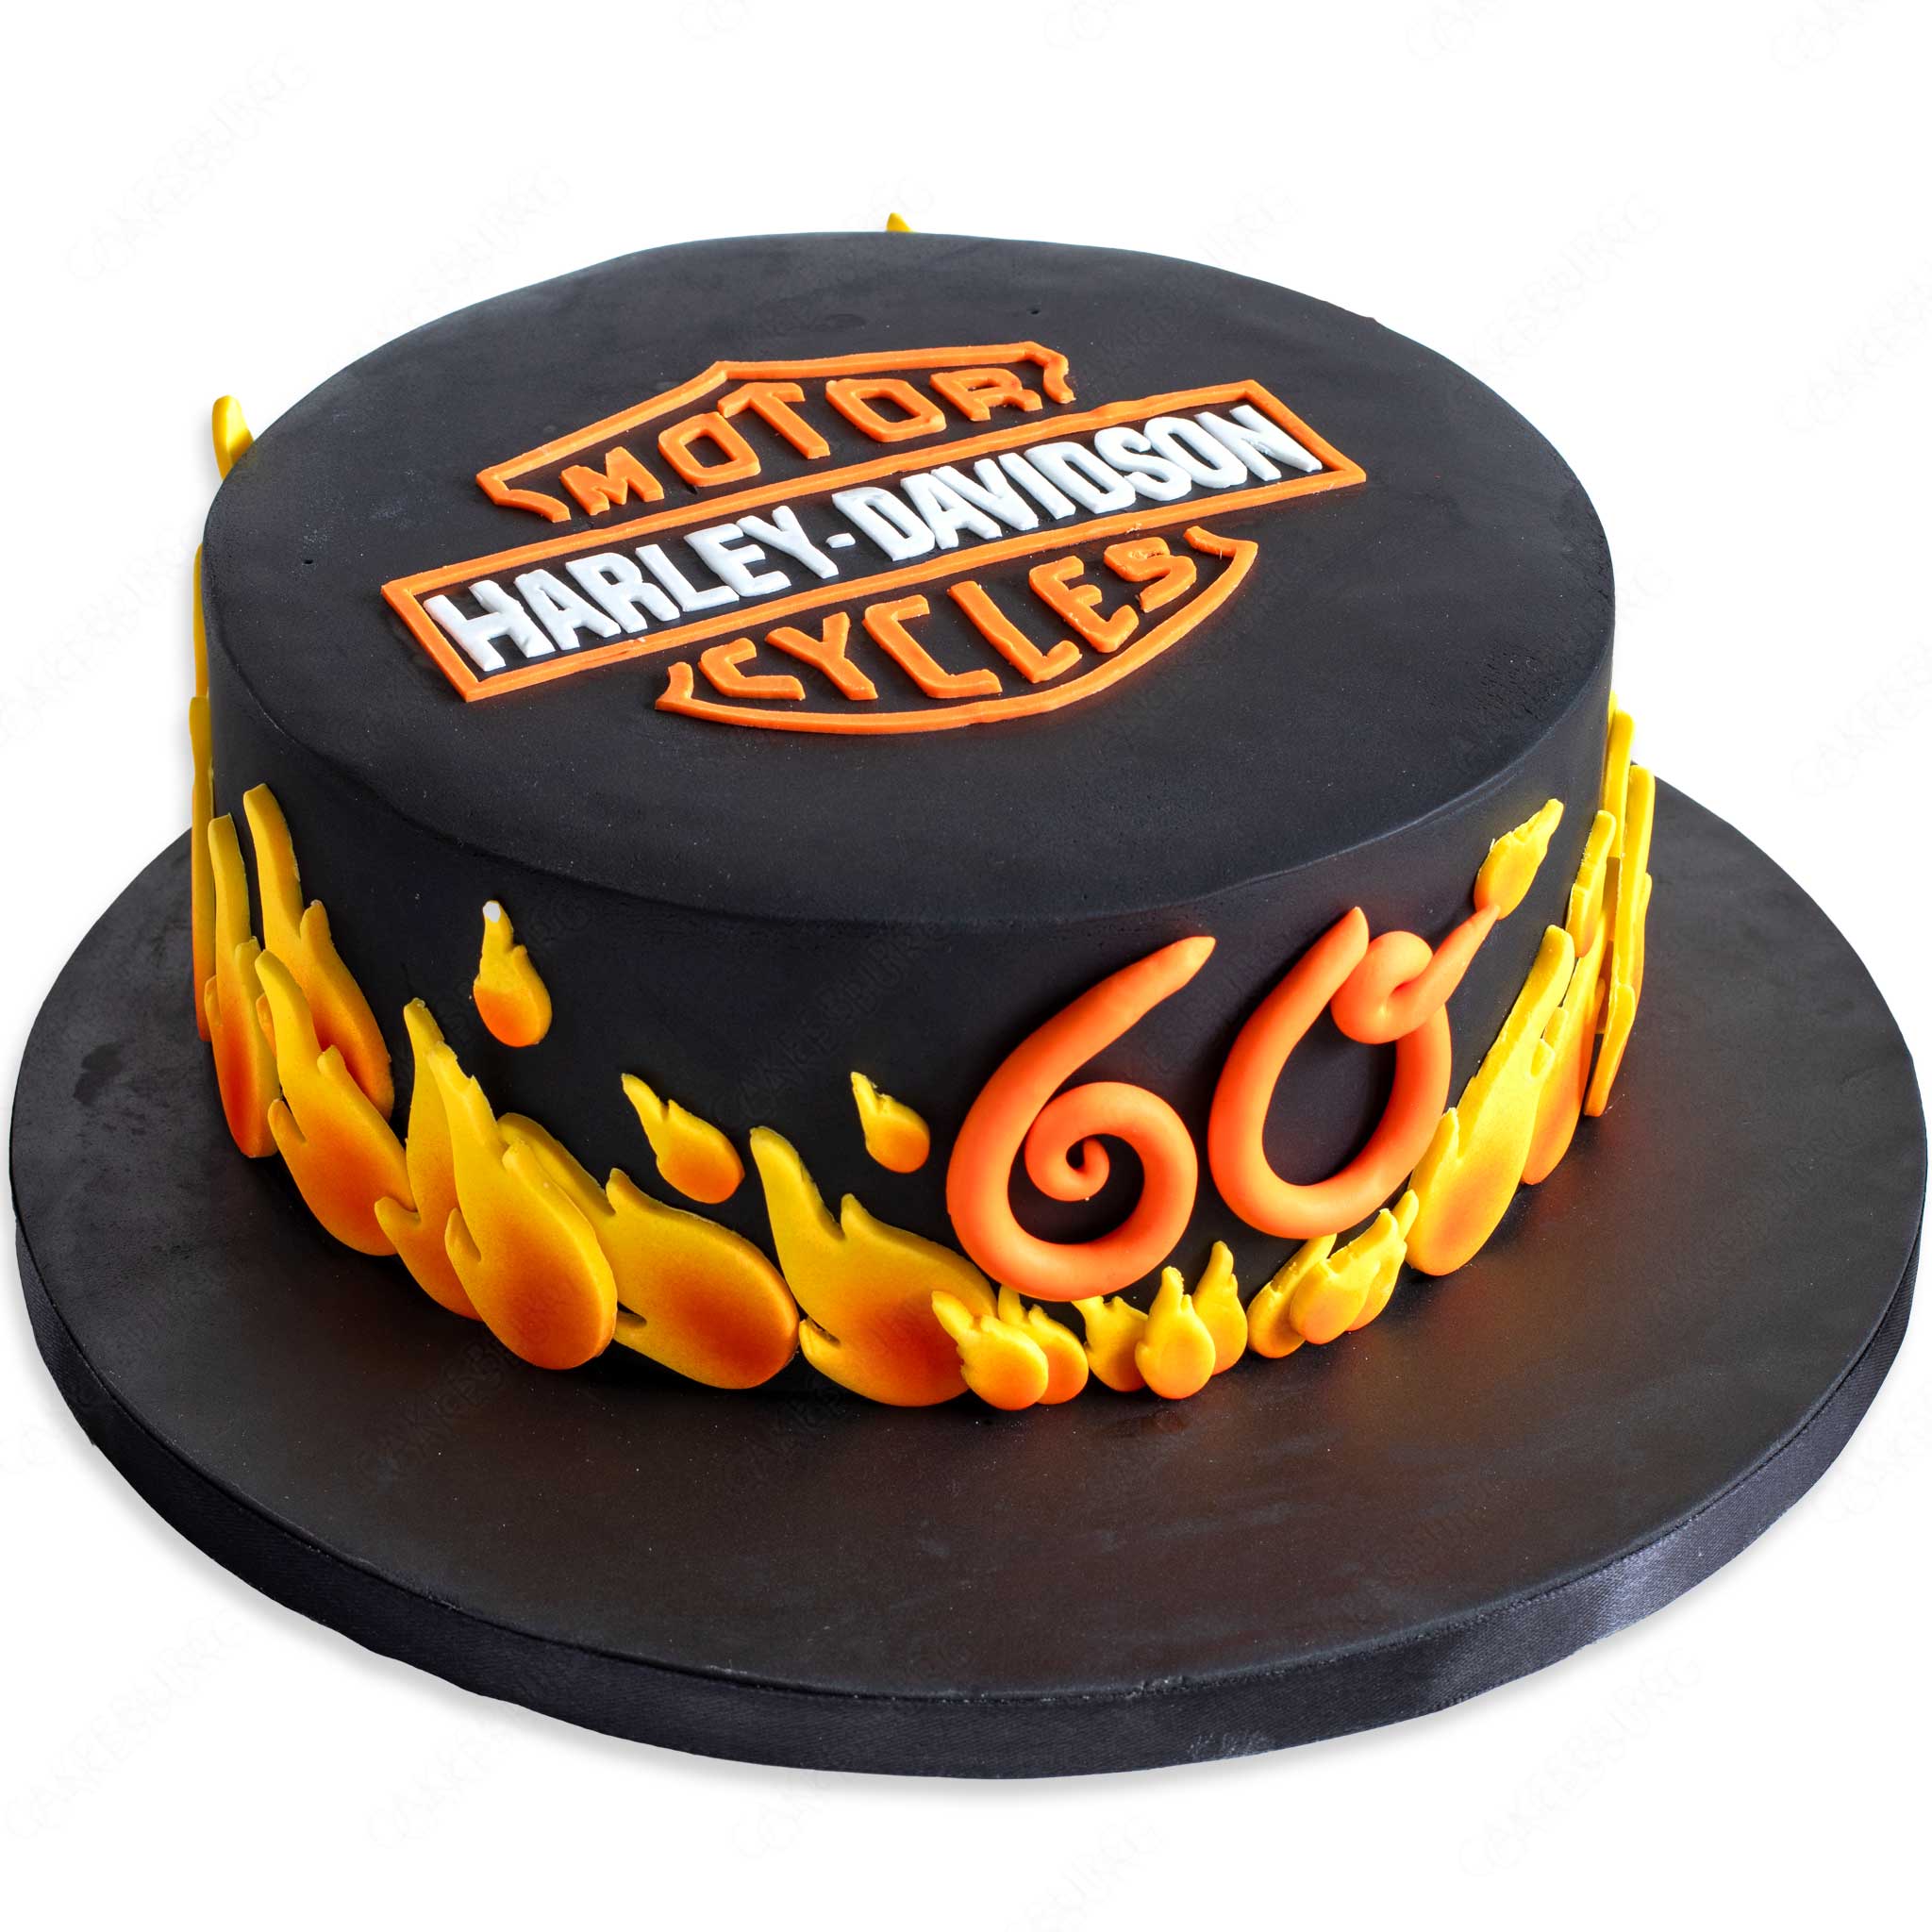 Harley Davidson Cake, Motorbike Birthday Cake | Cool birthday cakes,  Motorcycle cake, Birthday cakes for men